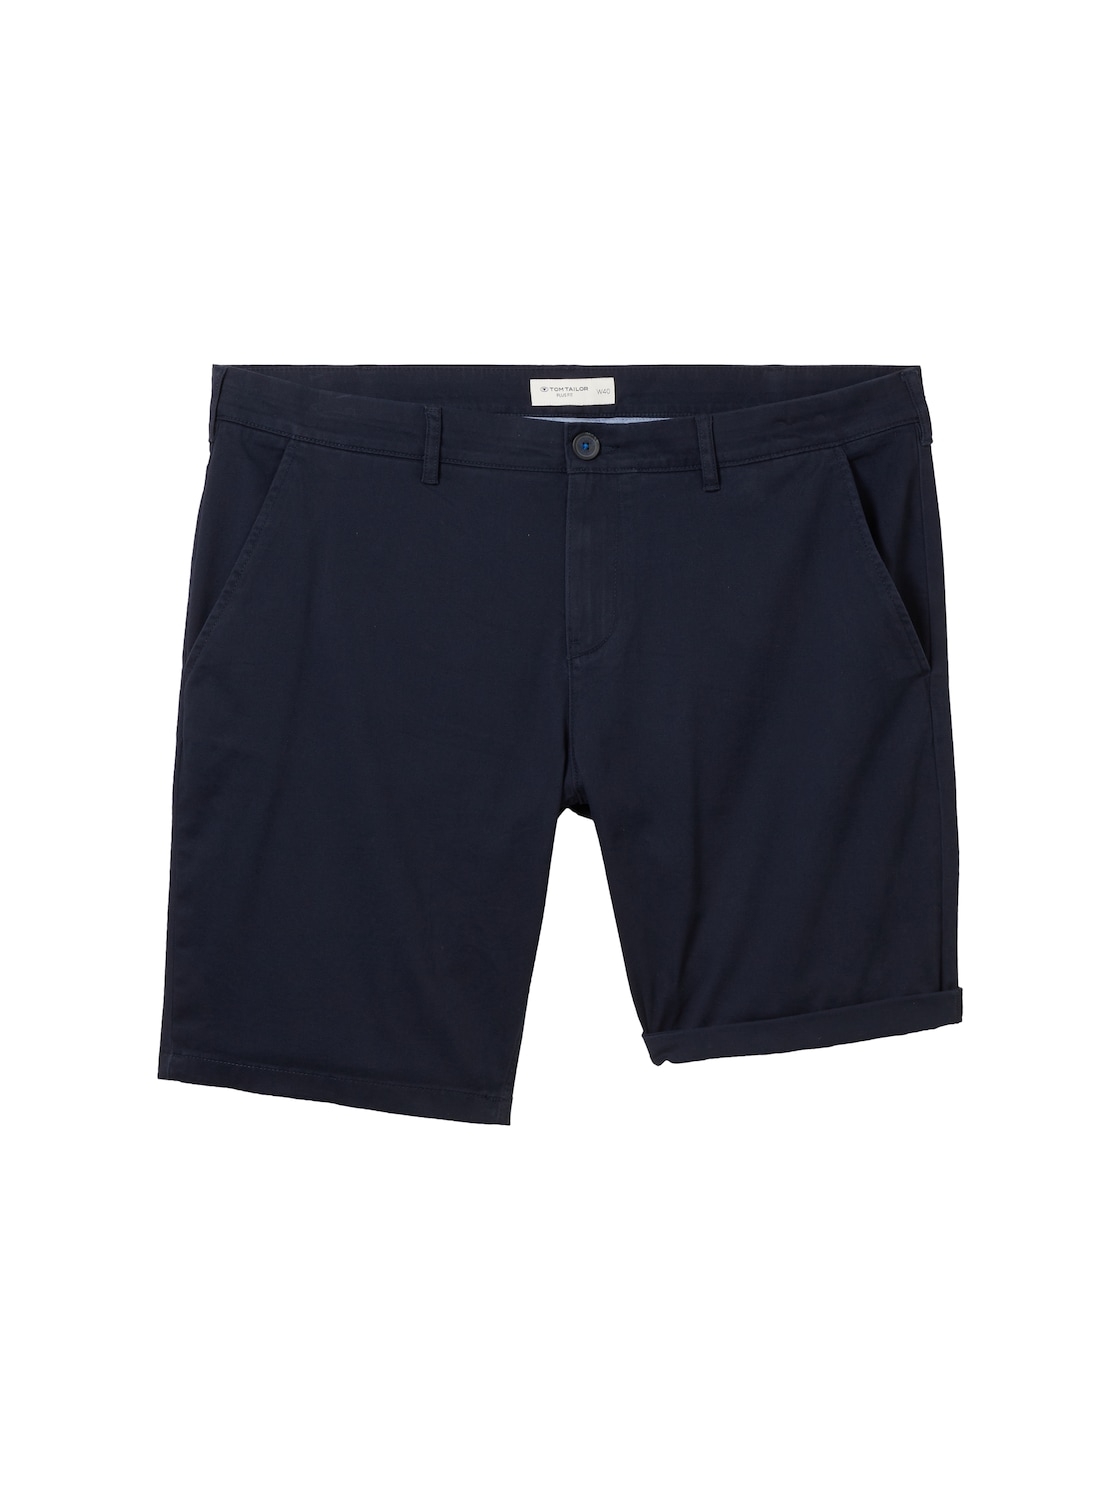 TOM TAILOR Herren Plus - Chino Shorts, blau, Uni, Gr. 42 von Tom Tailor